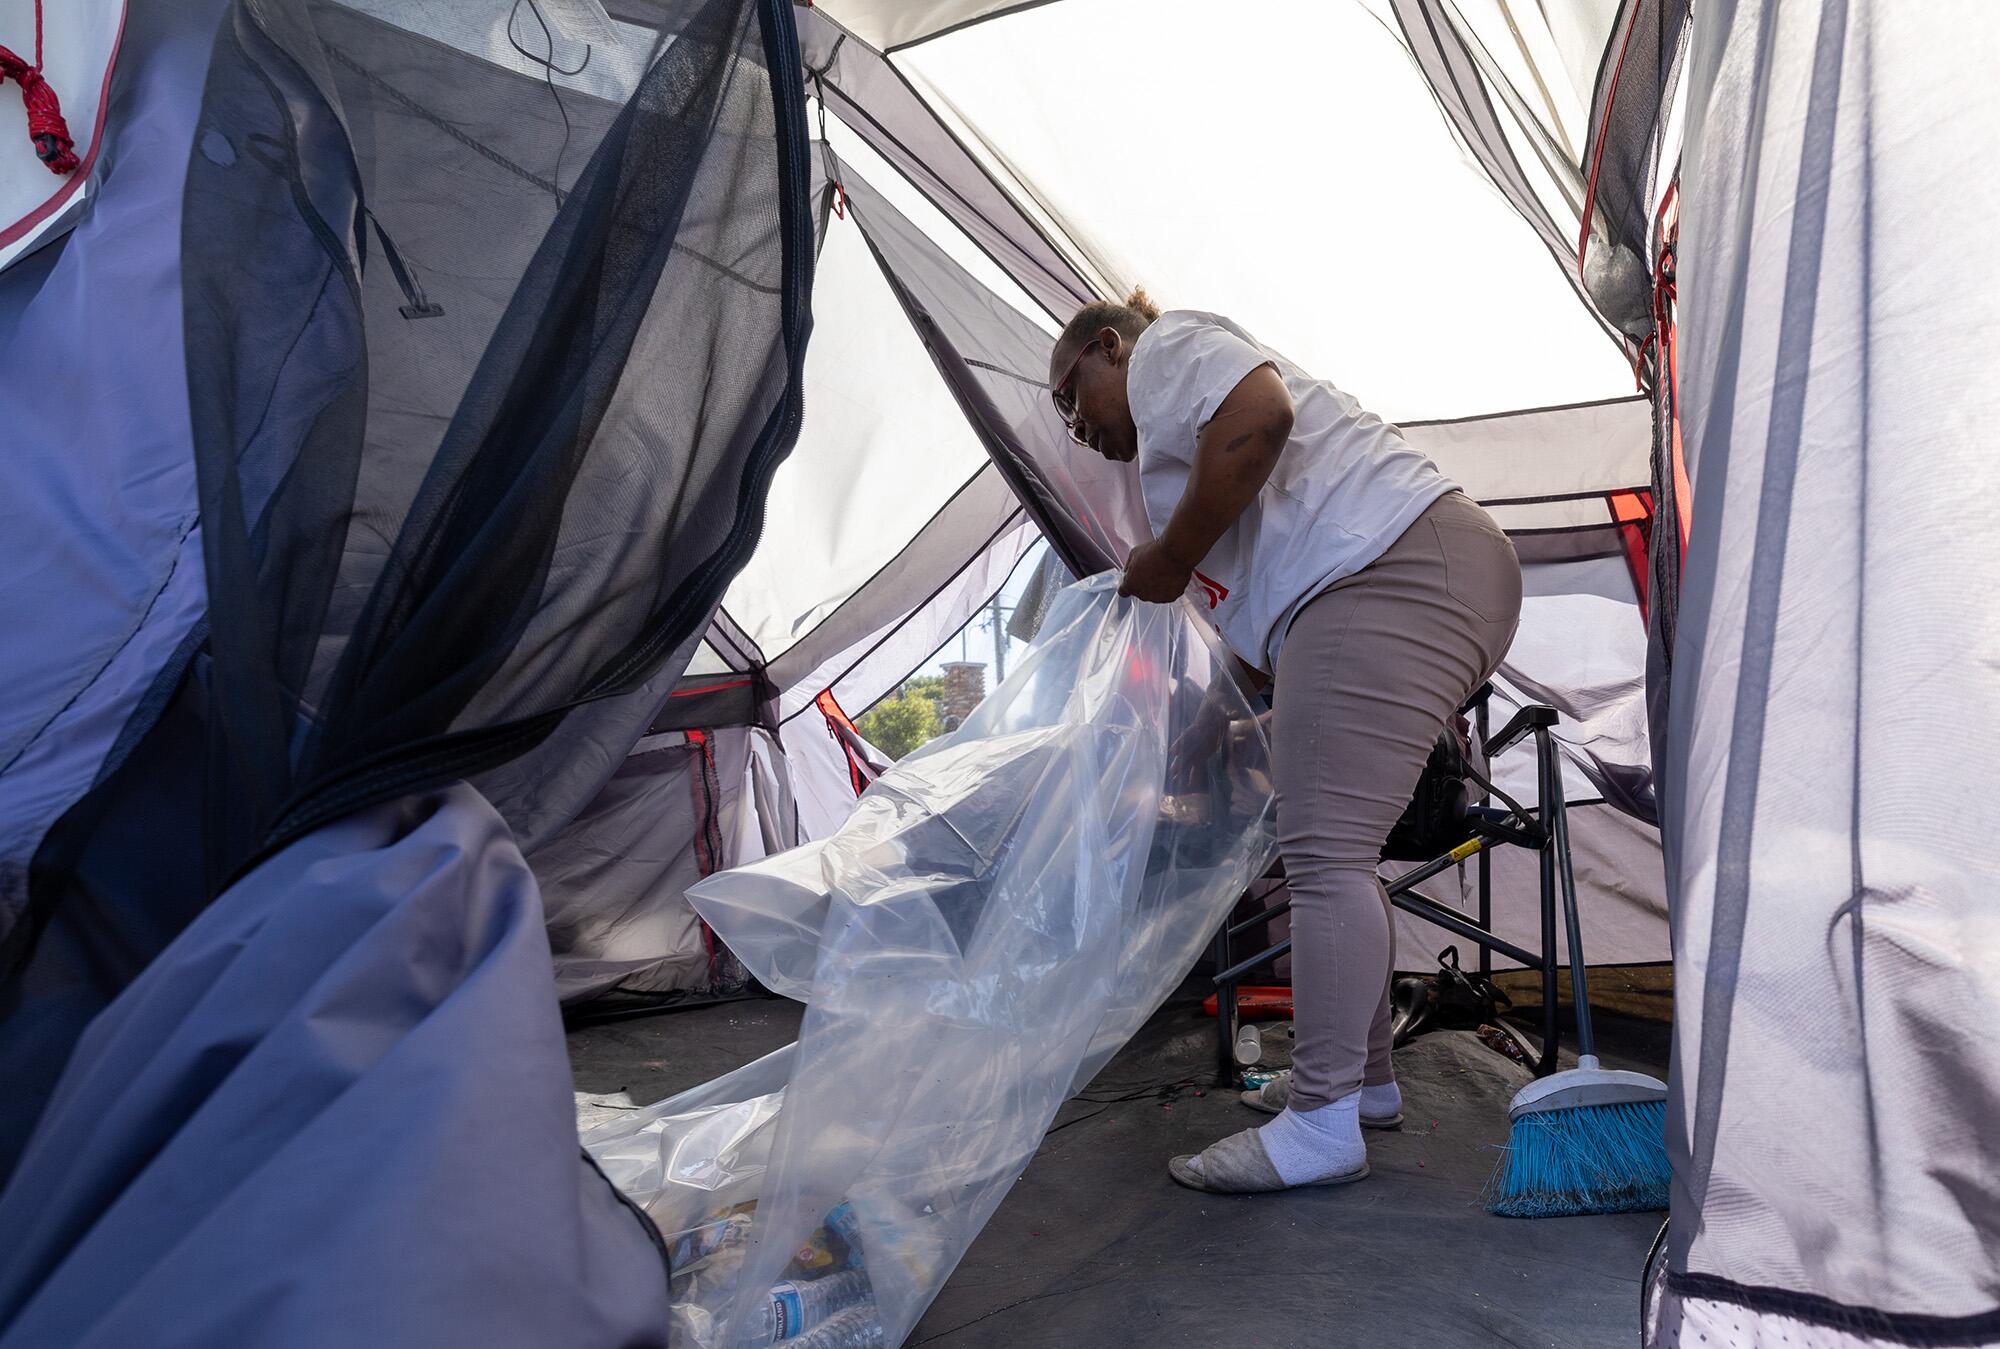 A woman in a tent puts items into a plastic bag.